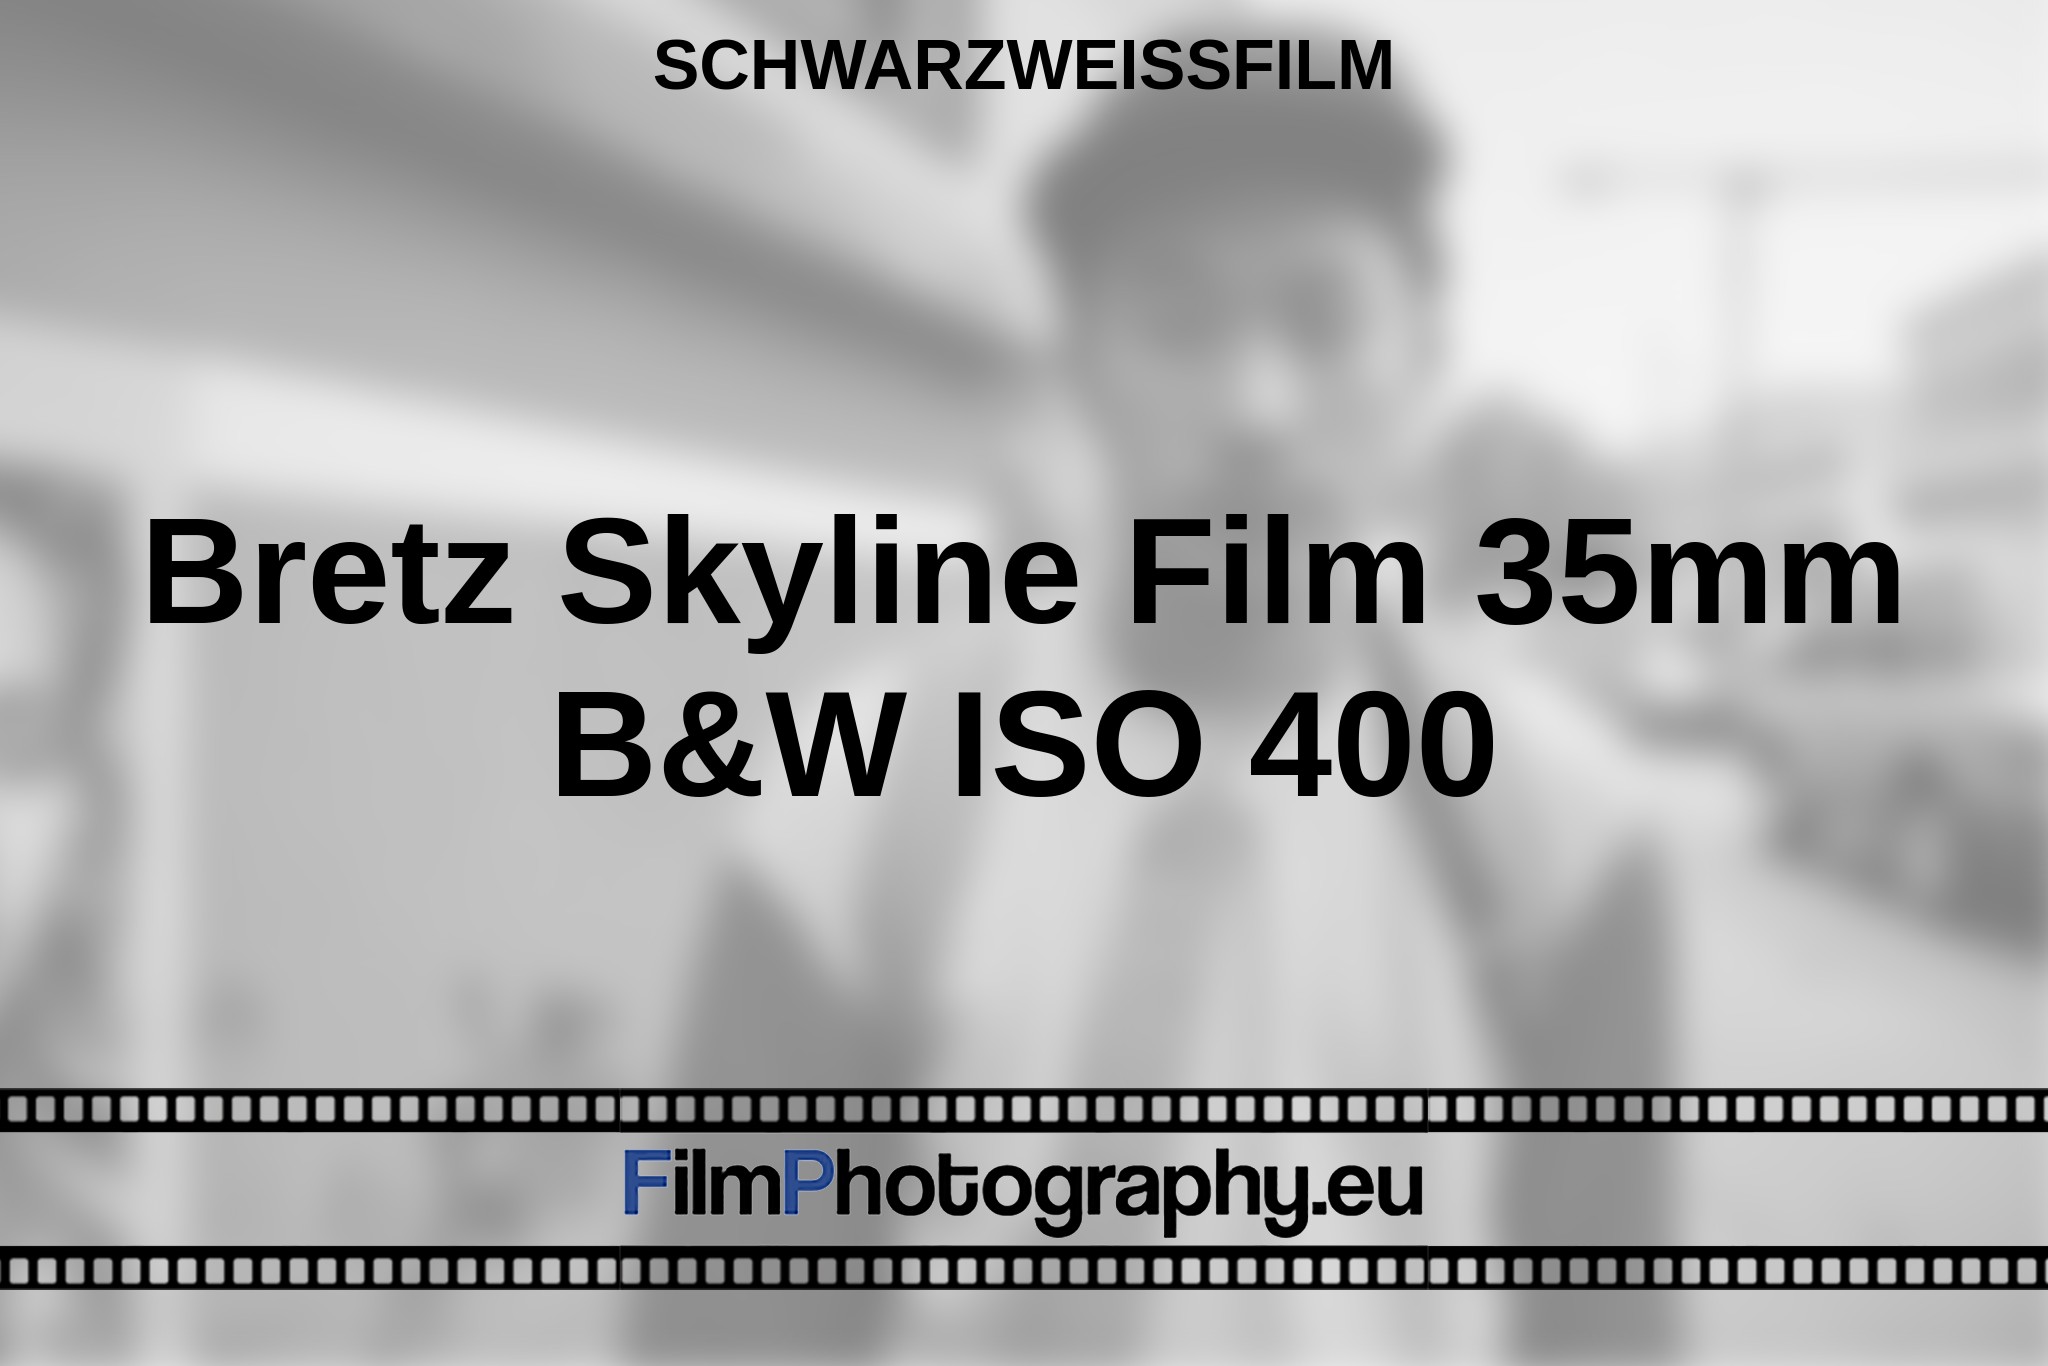 bretz-skyline-film-35mm-b-w-iso-400-schwarzweißfilm-bnv.jpg